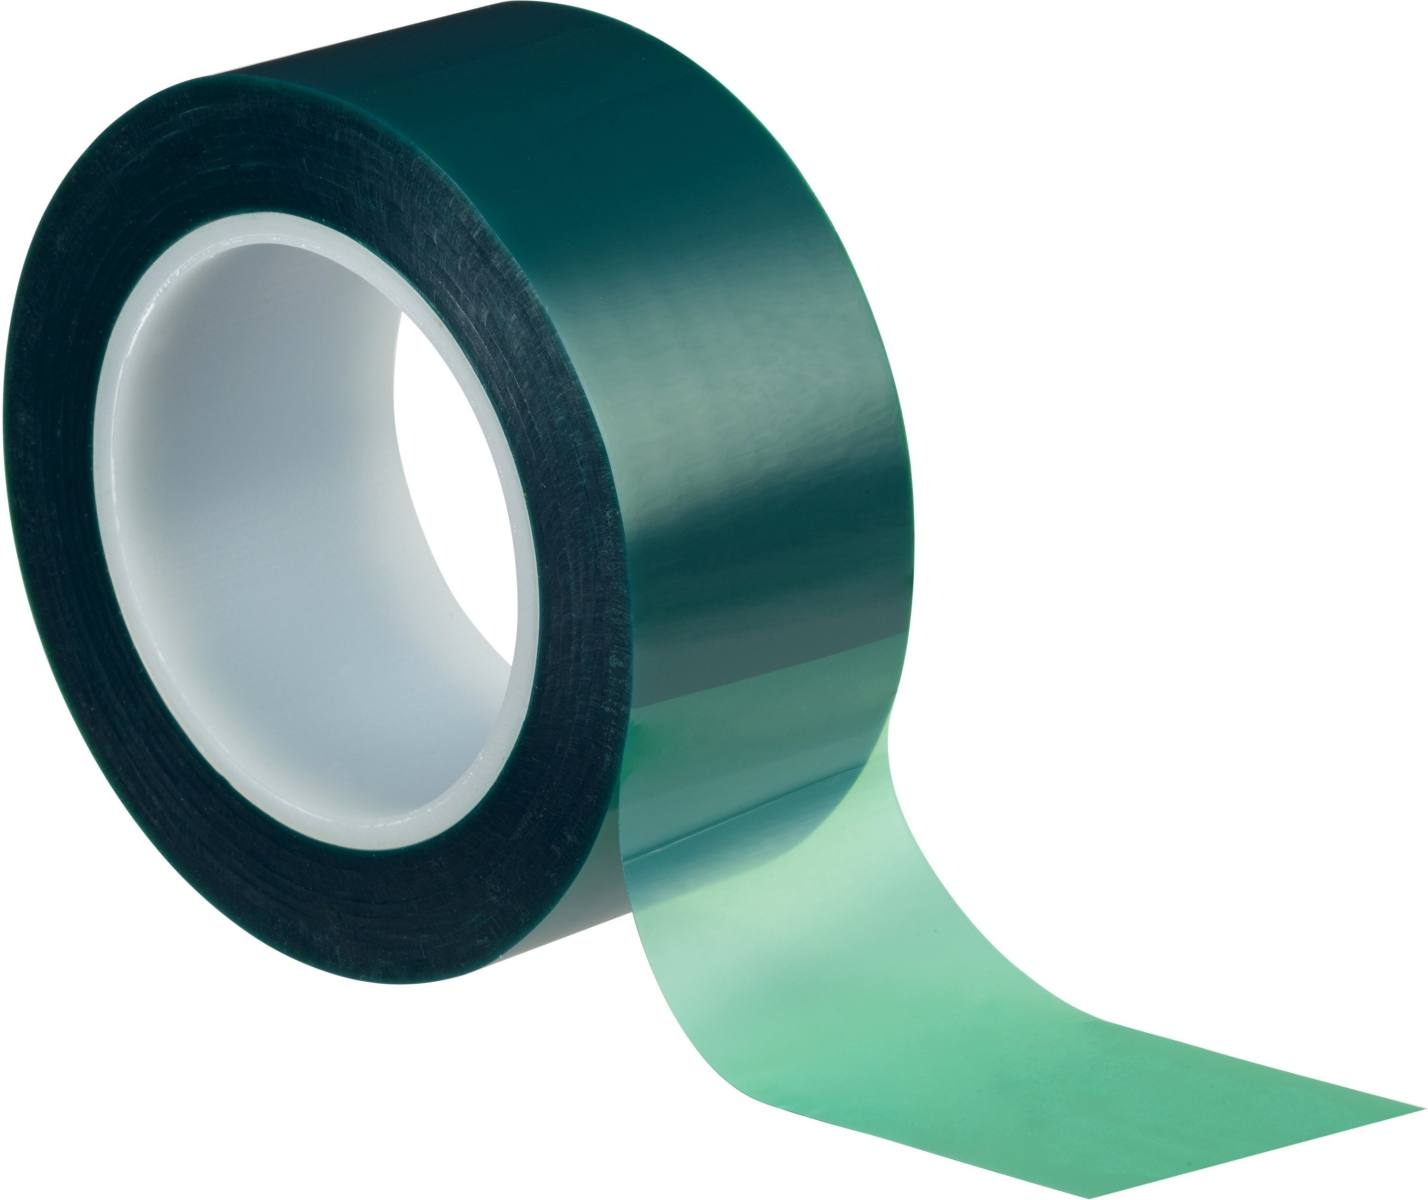 3M polyester masking tape 8992, green, 12 mm x 66 m